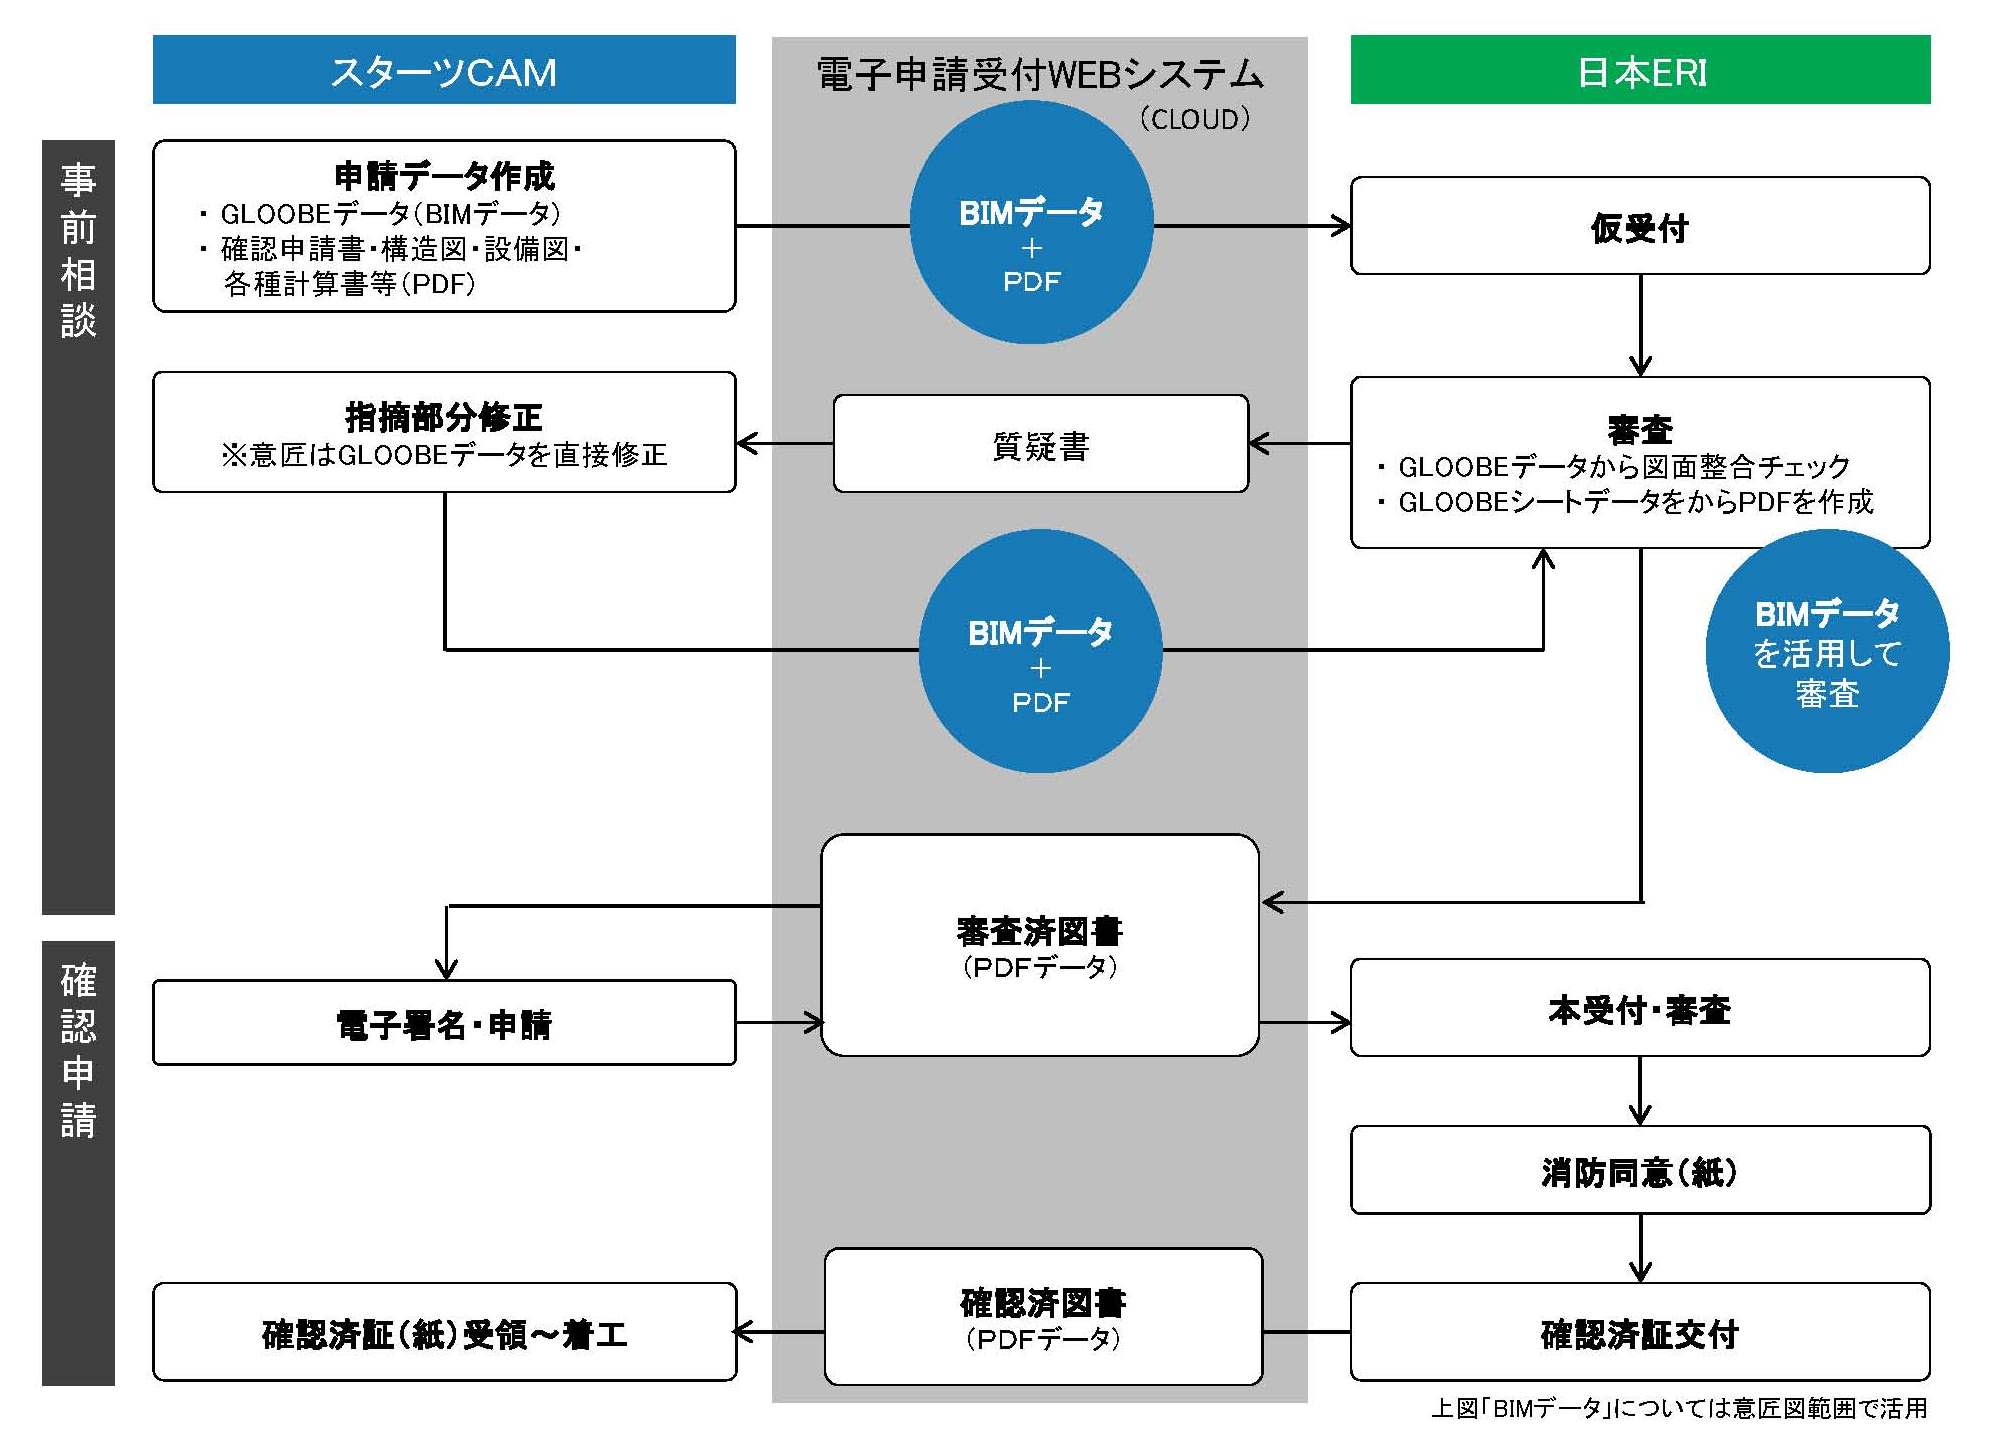 　GLOOBE活用による建築確認申請フロー図　Ⓒ日本ERI